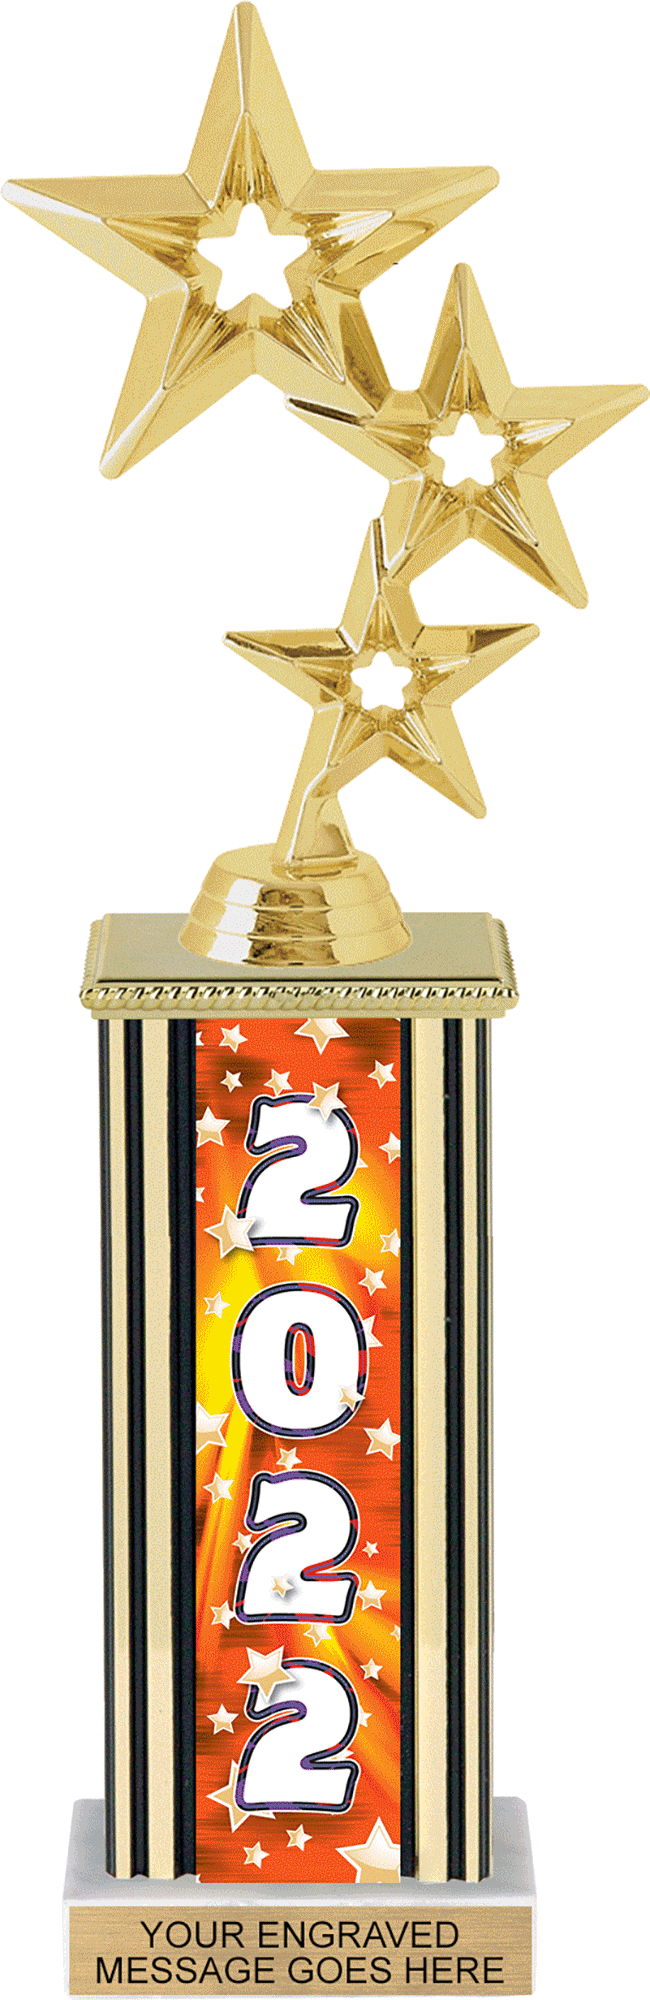 Year Glowing Stars Rectangle Column Trophy - Orange 12 inch